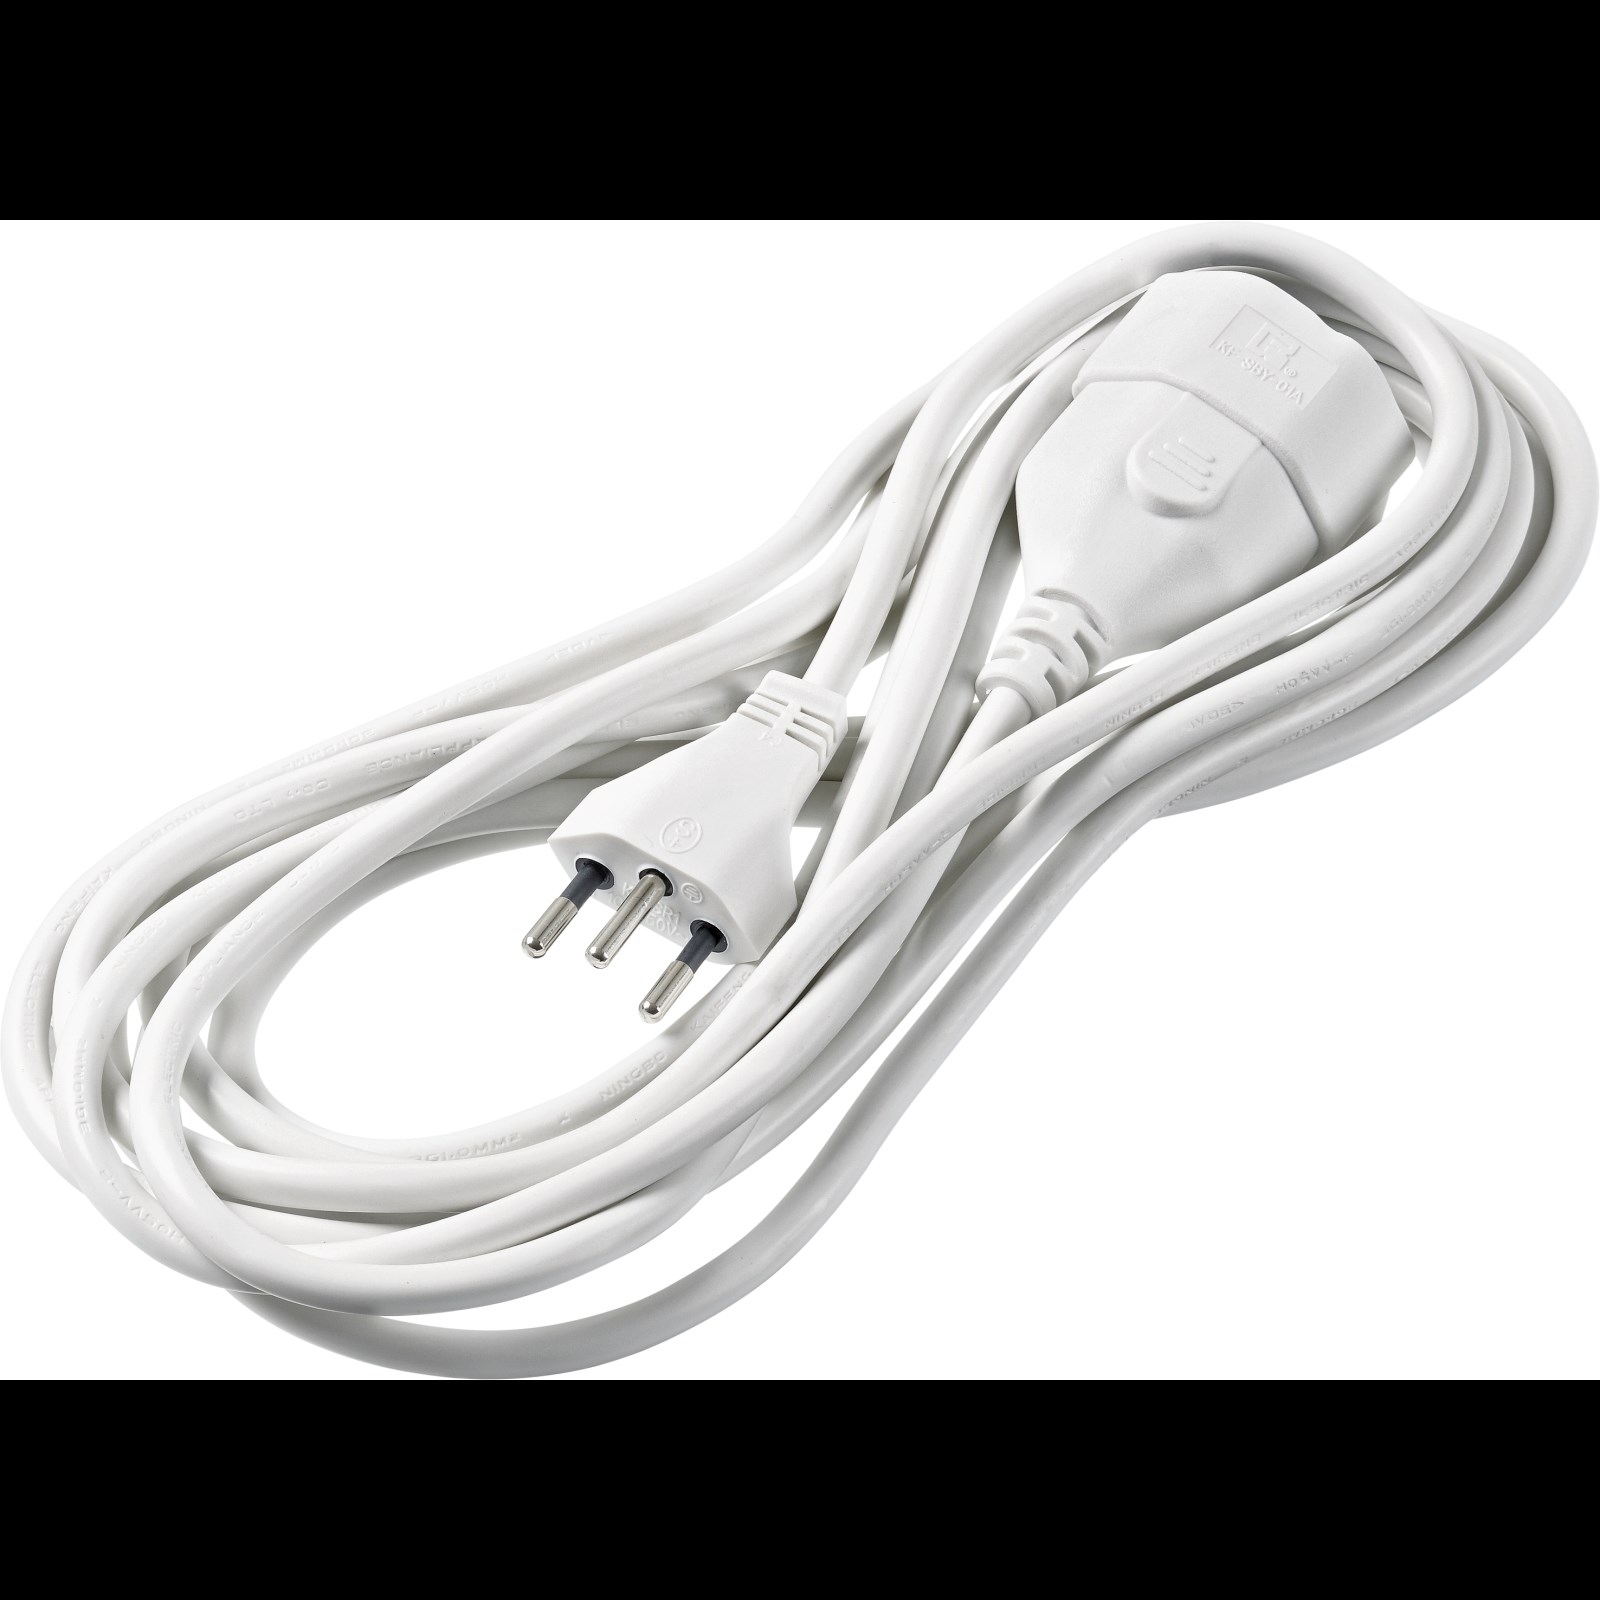 SCHÖNENBERGER Mini-câble de rallonge 20 cm, blanc